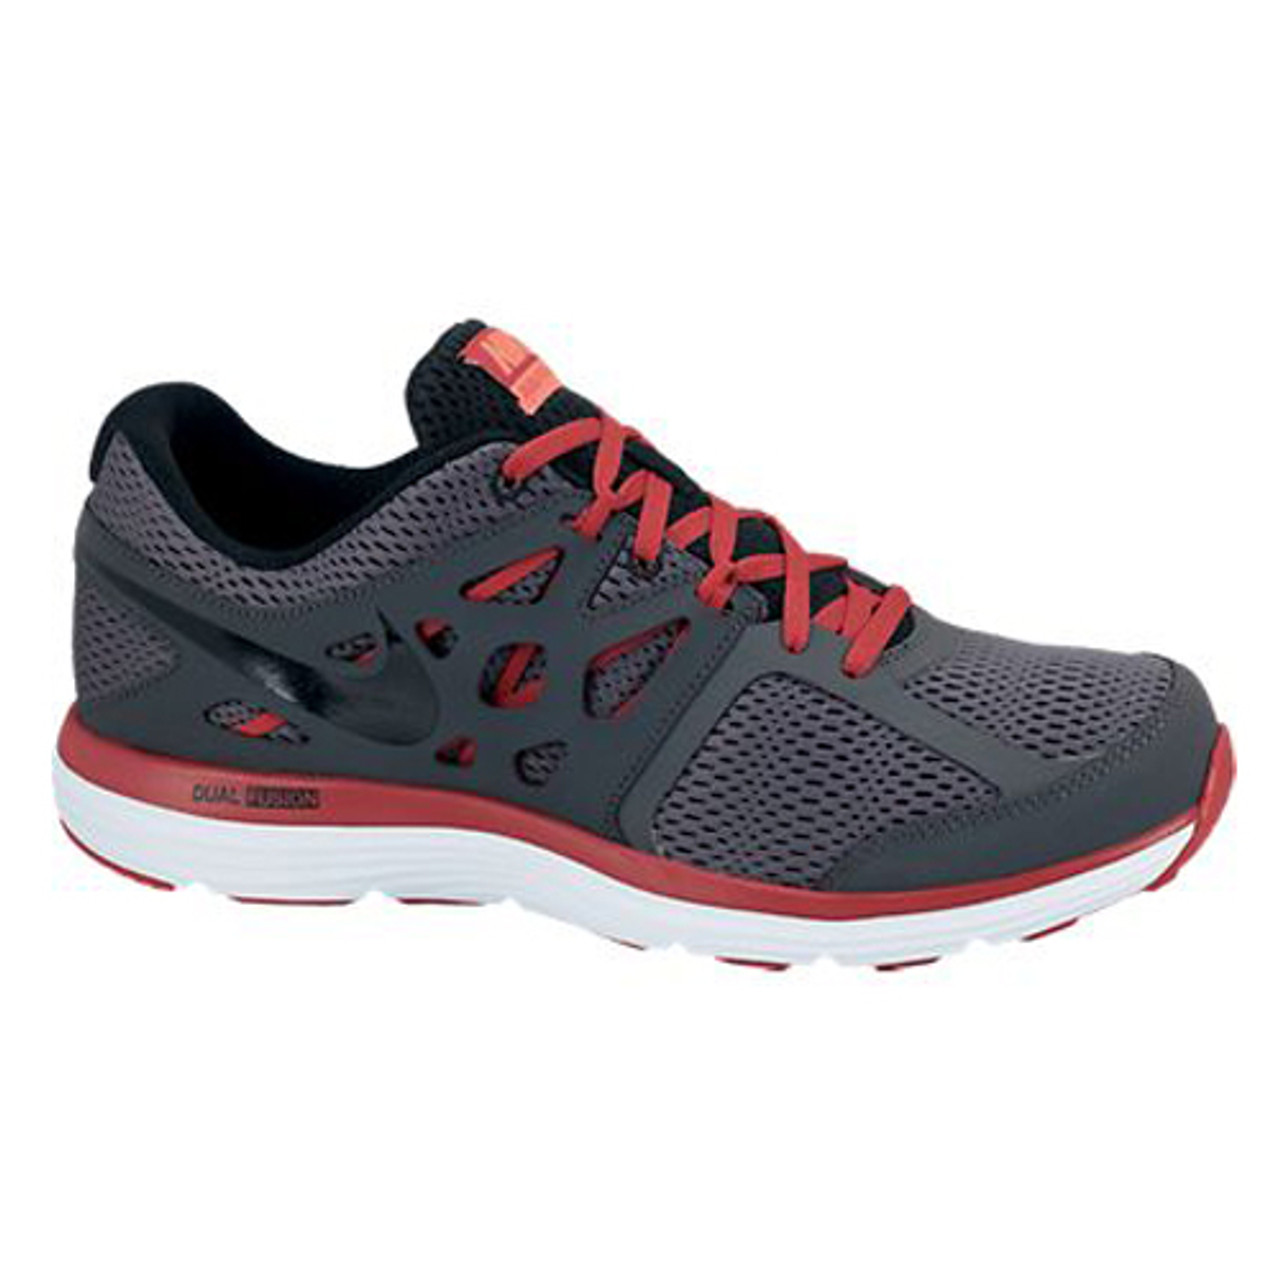 Nike Dual Lite Grey/Red Mens Running Shoes - | Discount Nike Men's Athletic & More Shoolu.com Shoolu.com